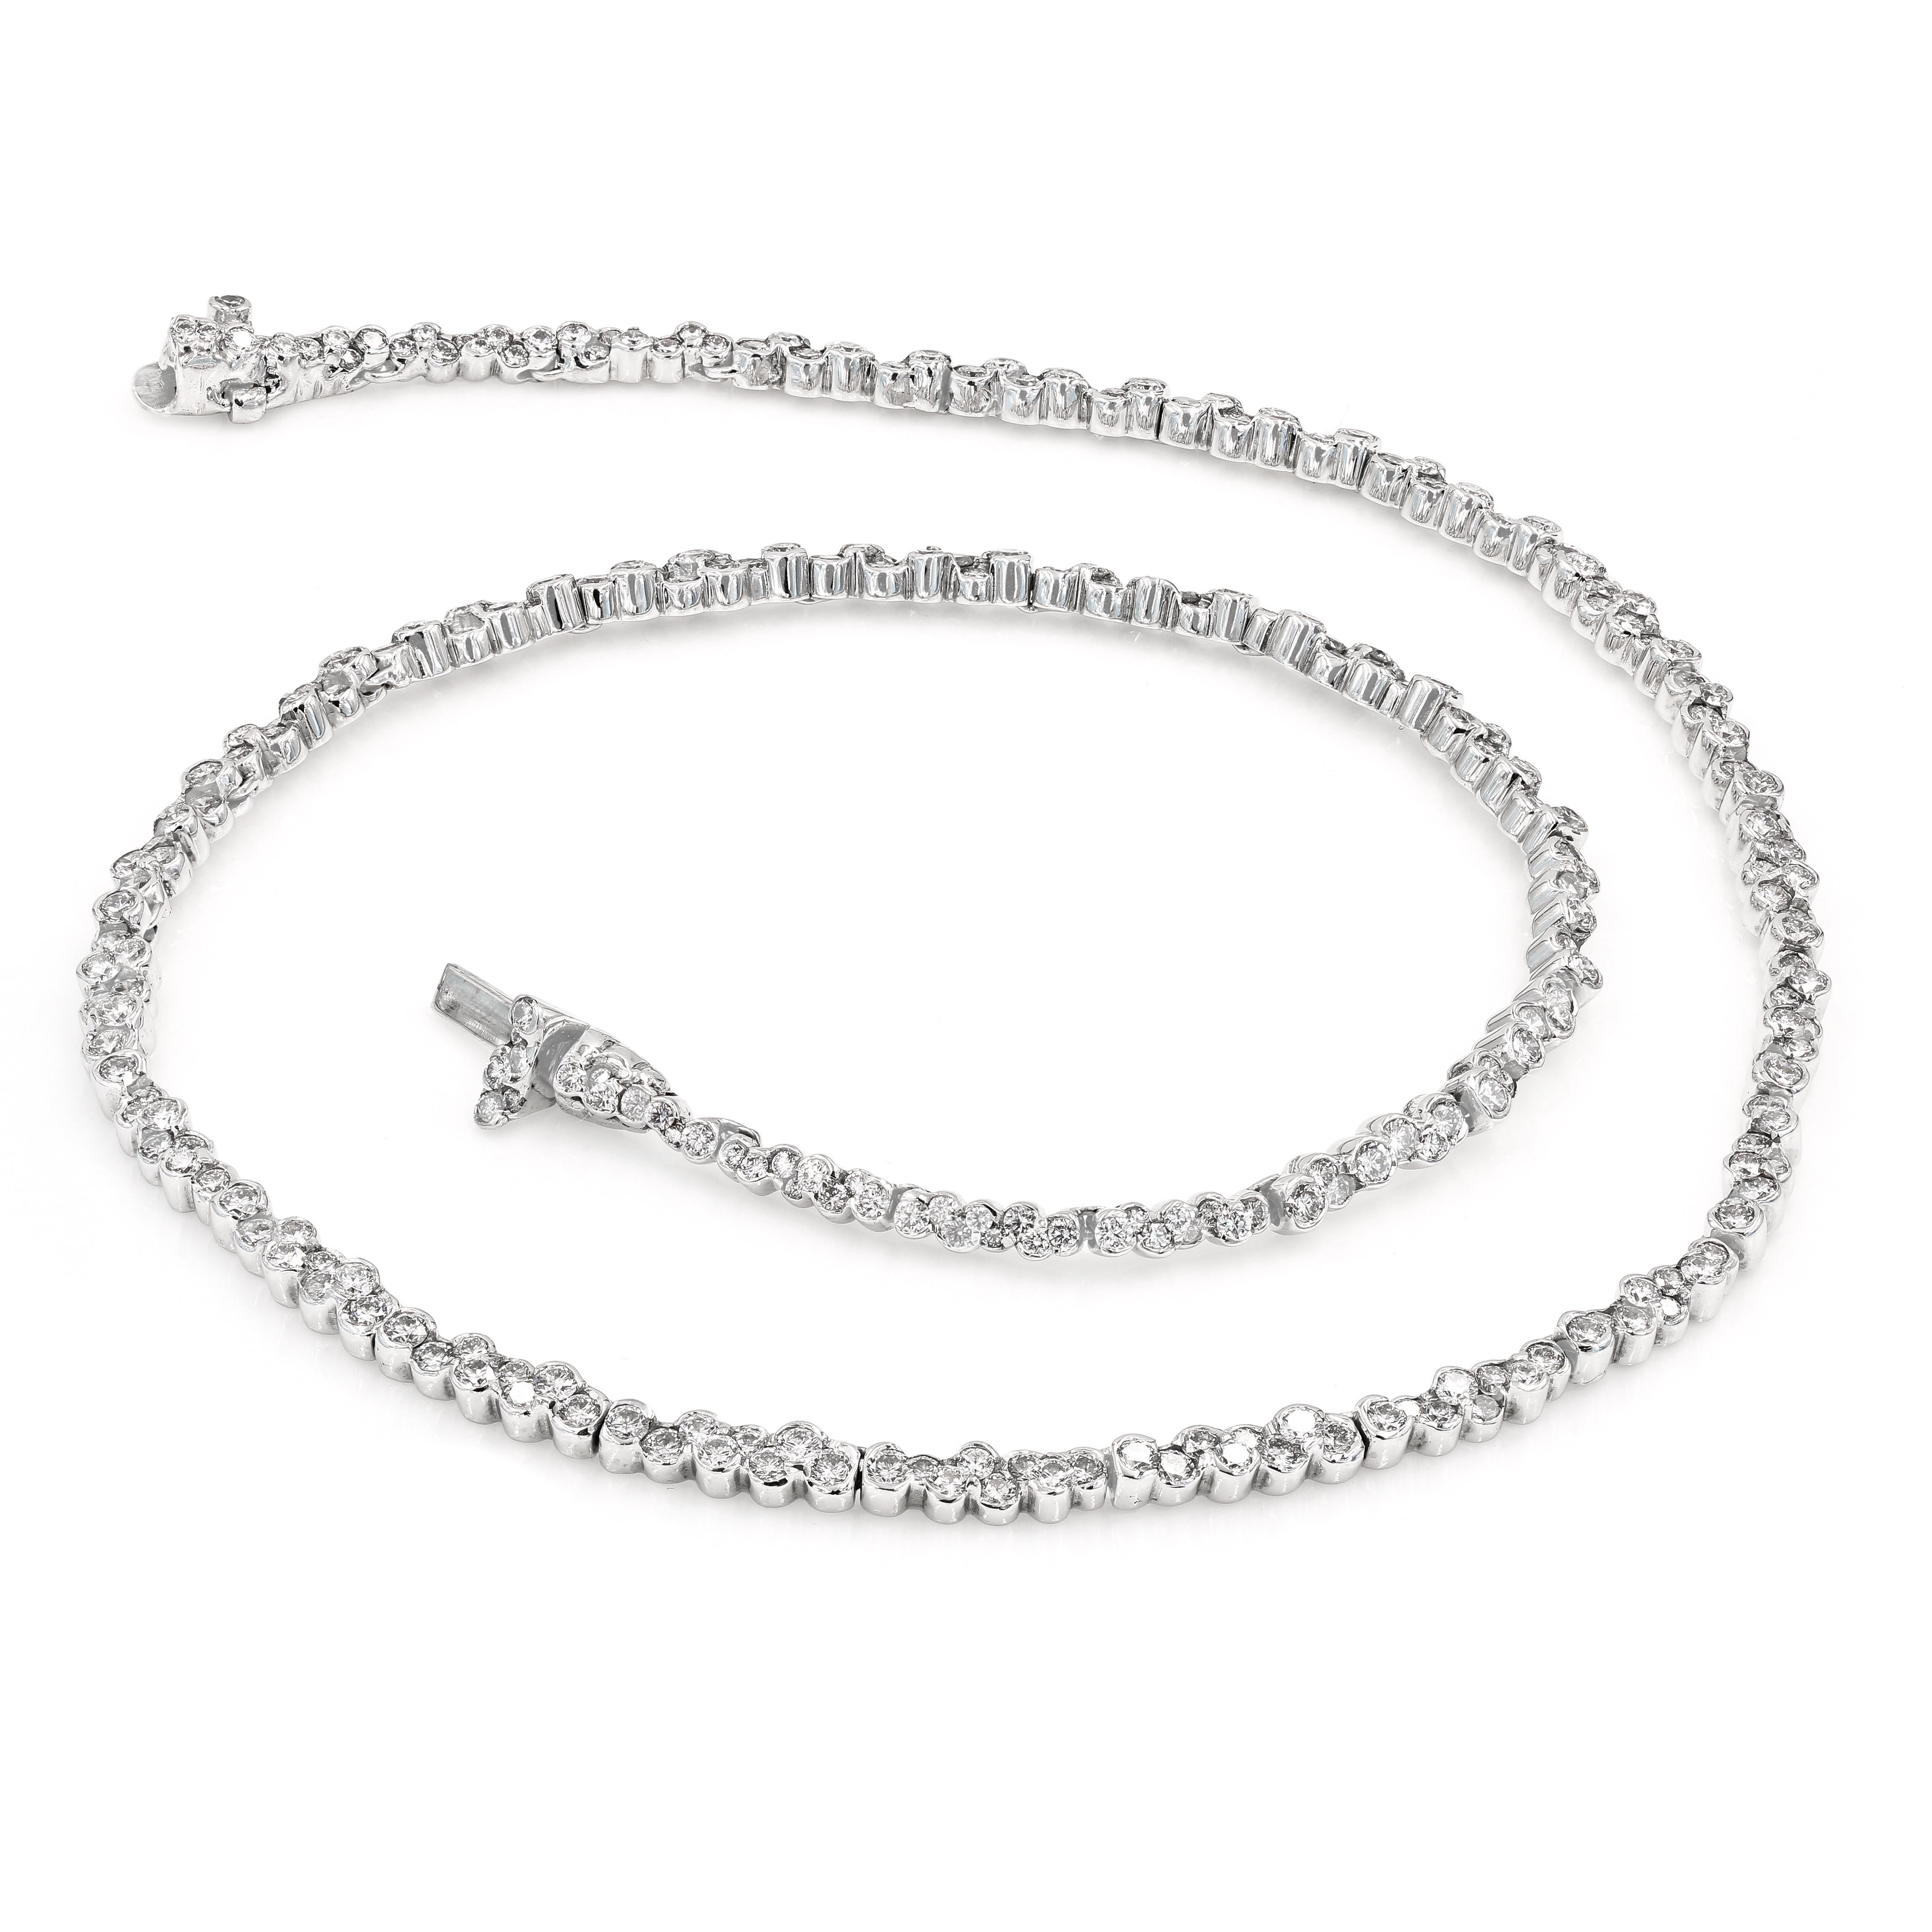 Round Cut Lester Lampert Original CumuLLus Cellebration Diamond Necklace in 18 Karat WG